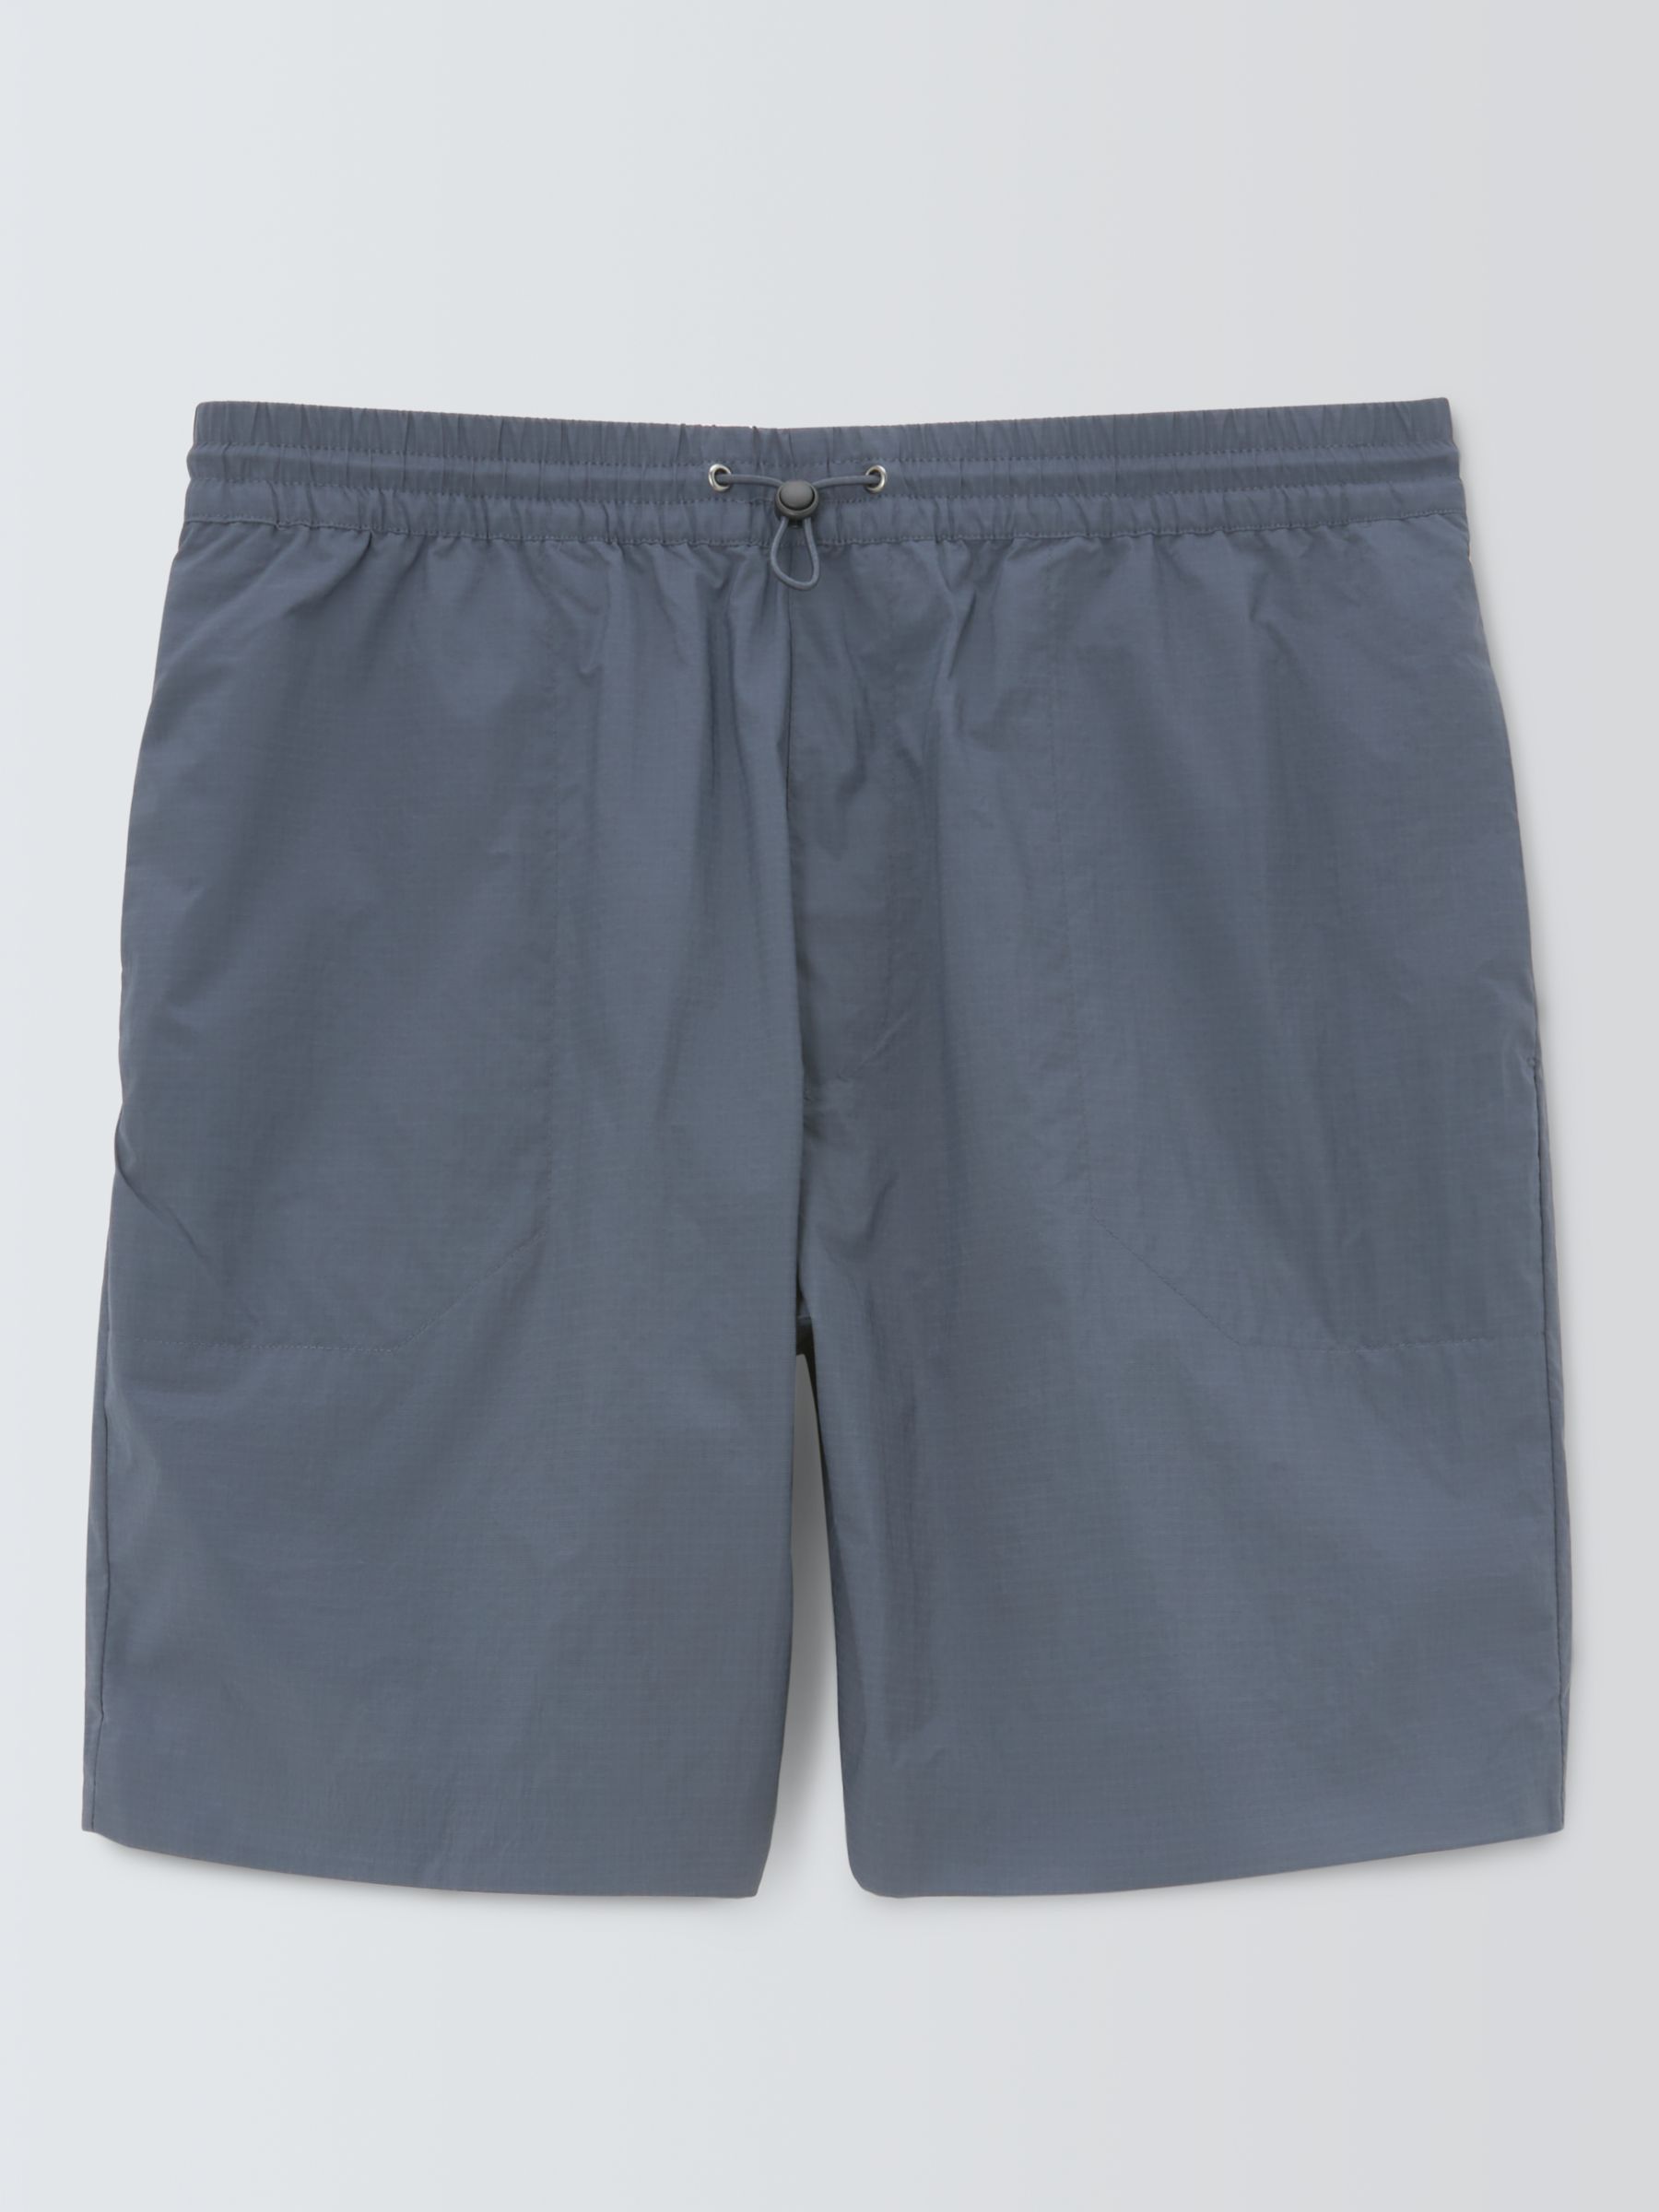 Kin Men's Nylon Shorts, Grey Slate, XXL